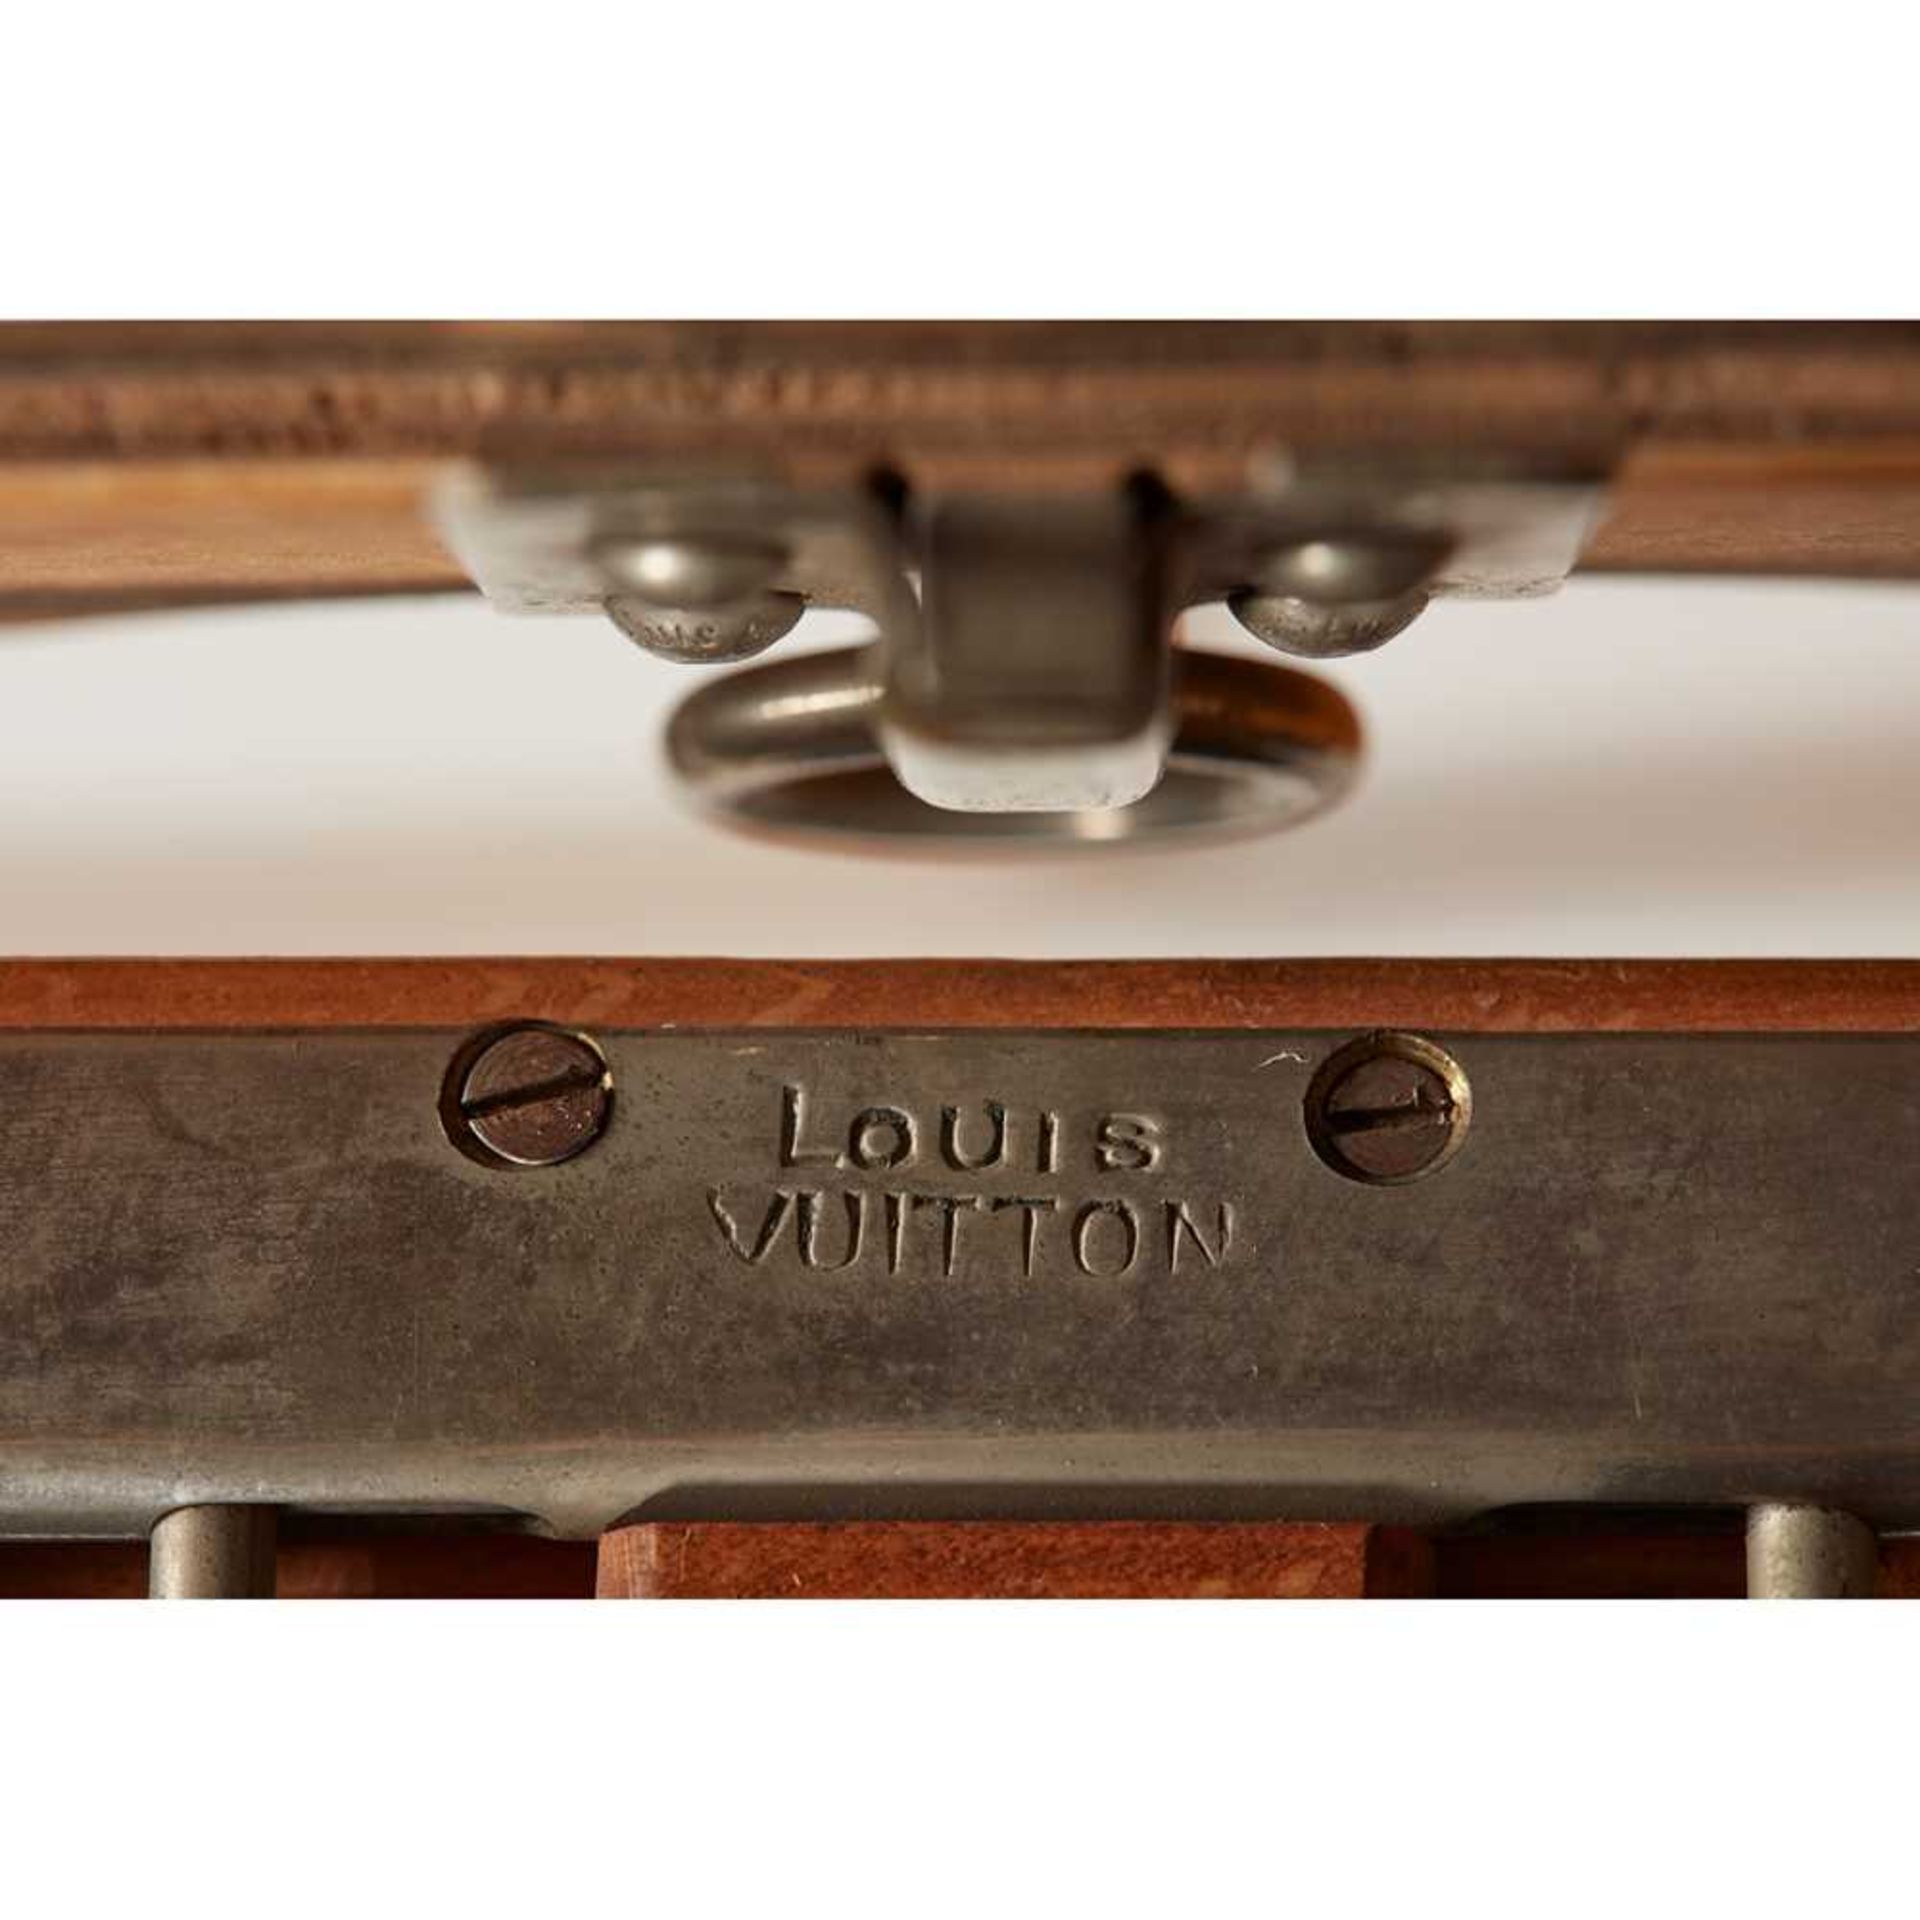 LOUIS VUITTON MONOGRAM WARDROBE TRUNK EARLY 20TH CENTURY - Image 4 of 21